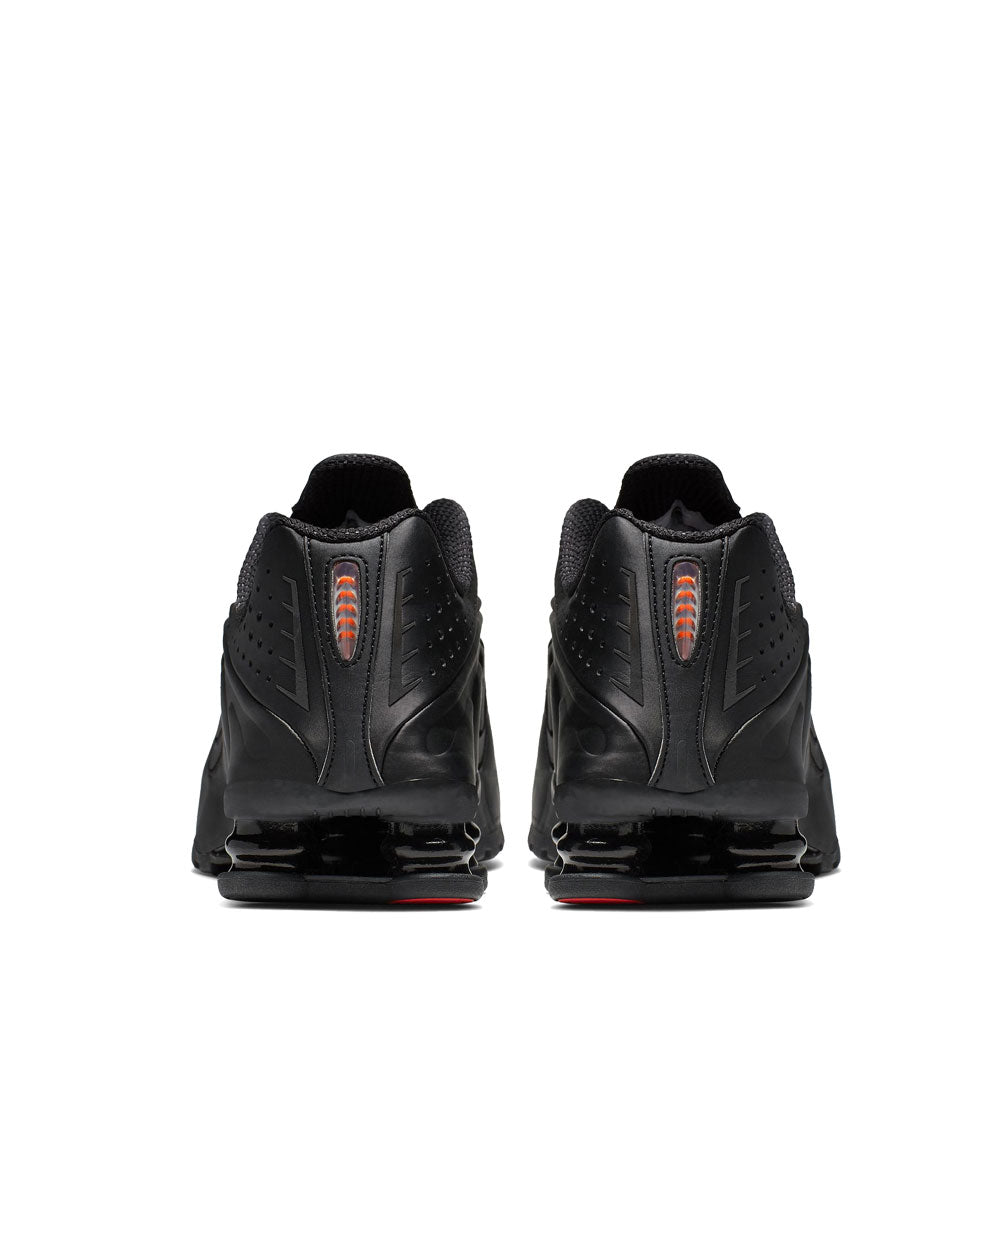 Nike Shox R4 Black AR3565-004